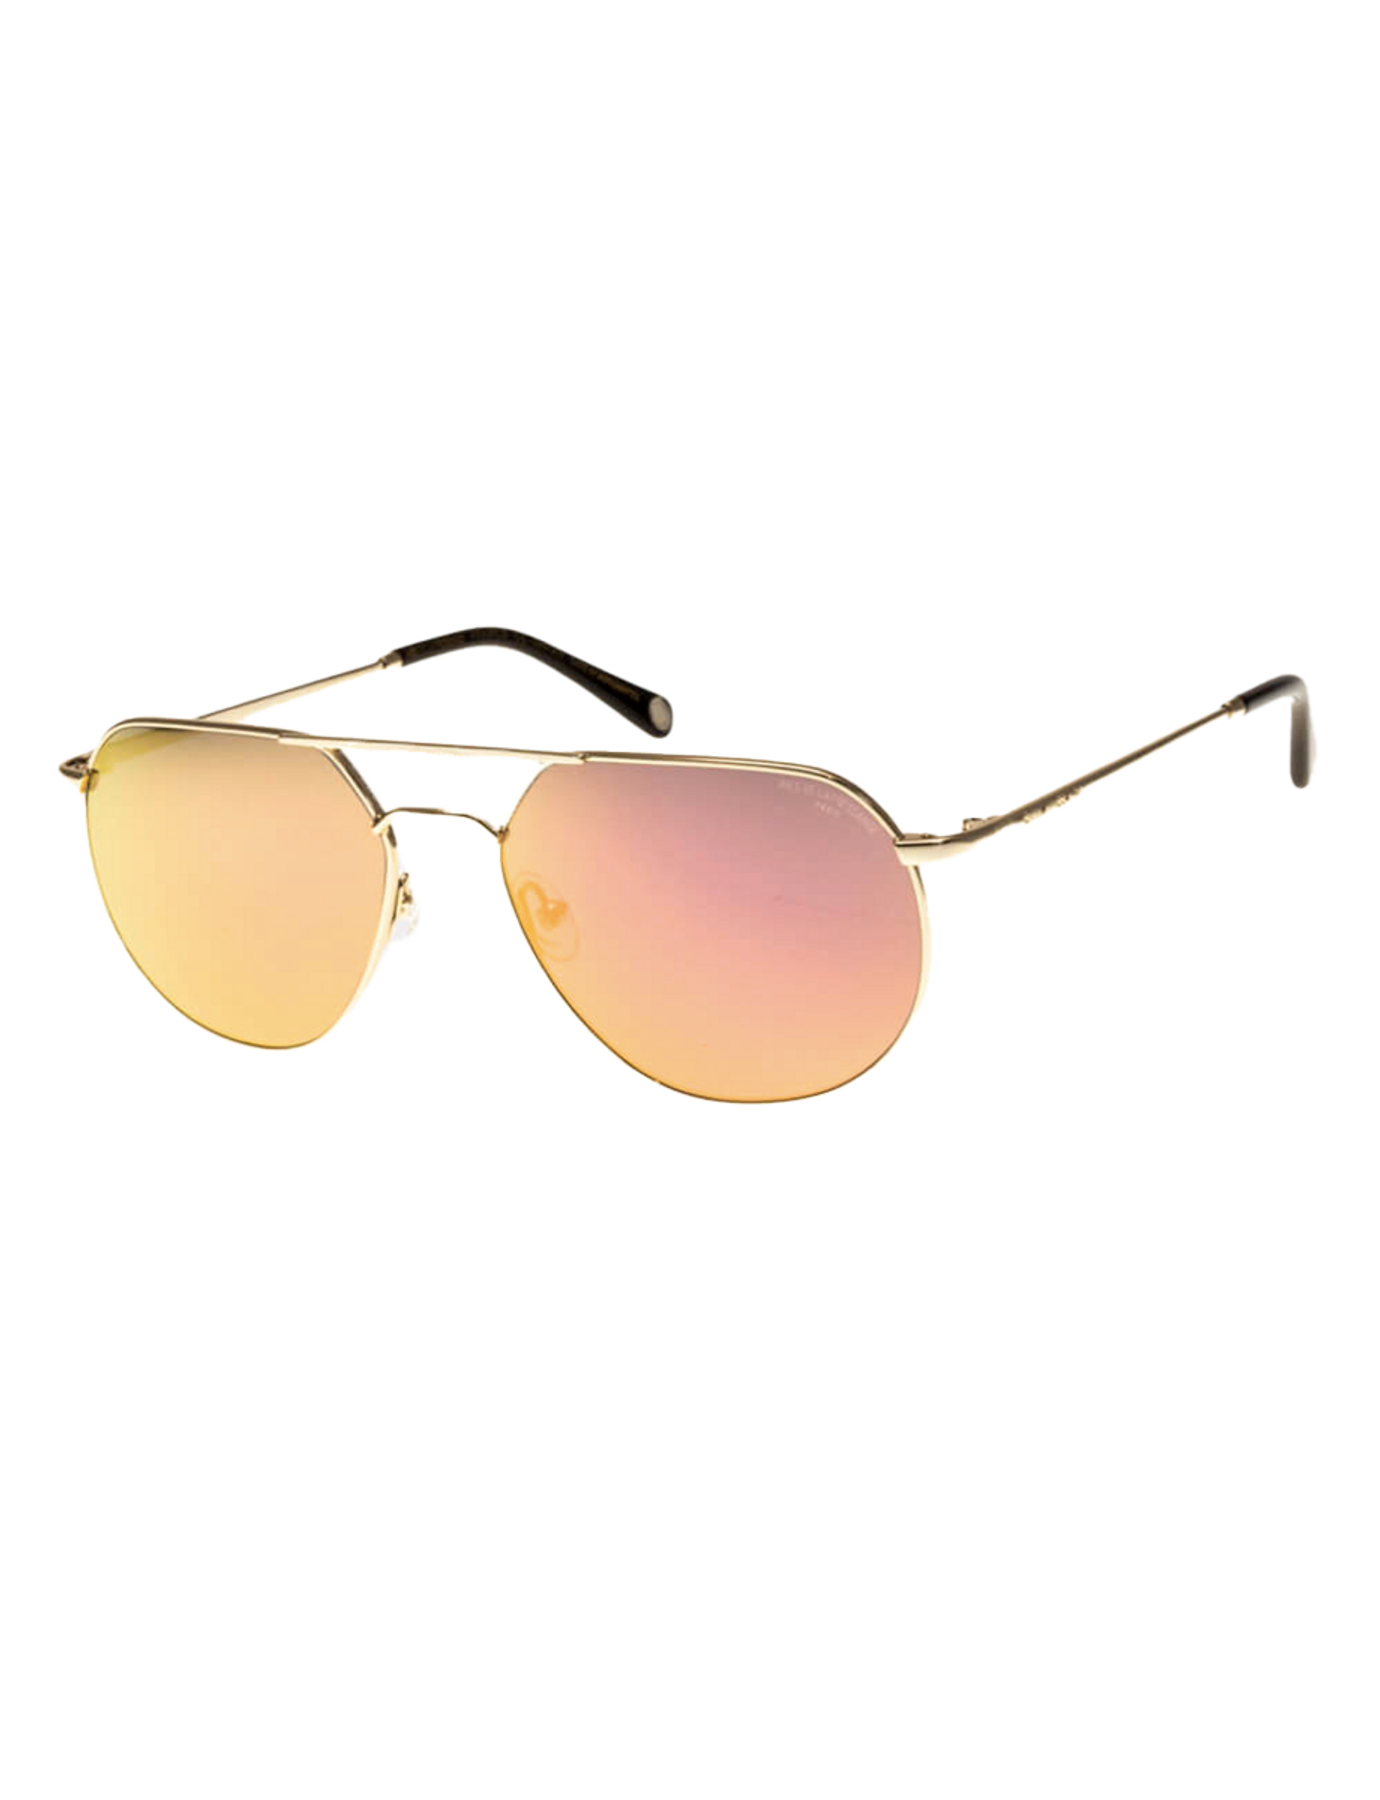 sunglasses-gaby-metal-gold